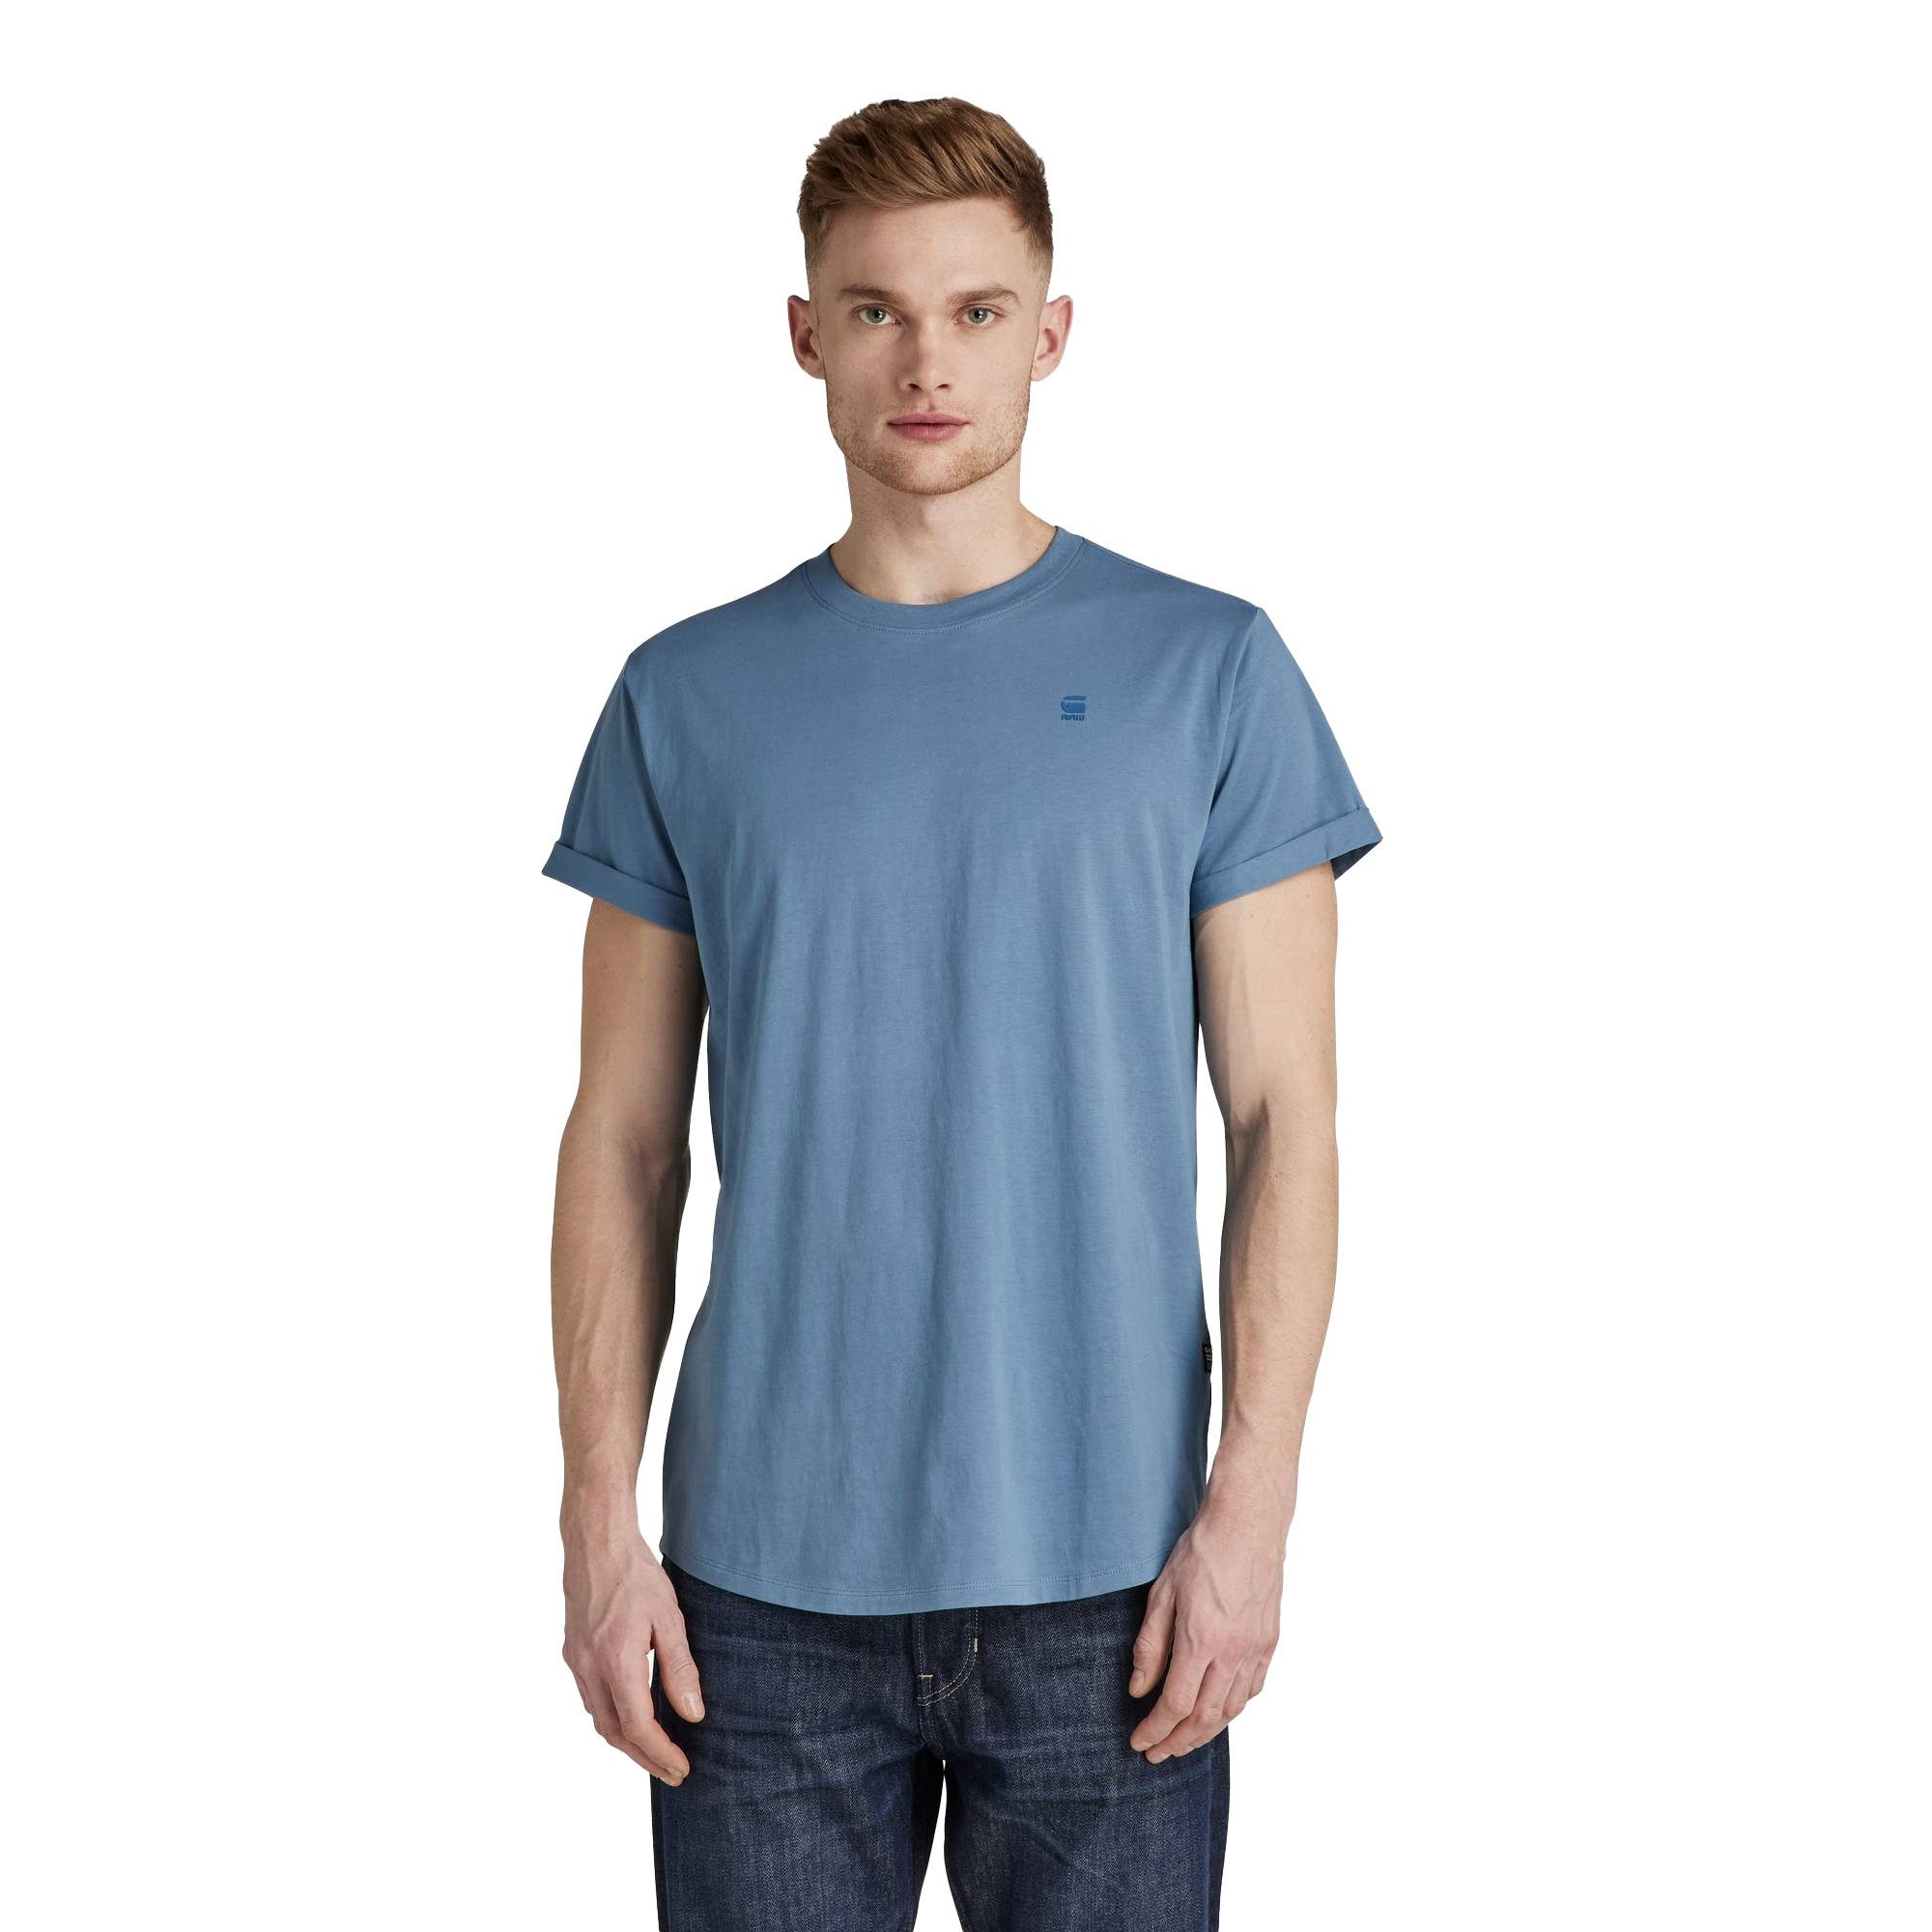 T-Shirt - Hellblau Cotton RAW Lash, Rundhals, G-Star T-Shirt Herren Organic